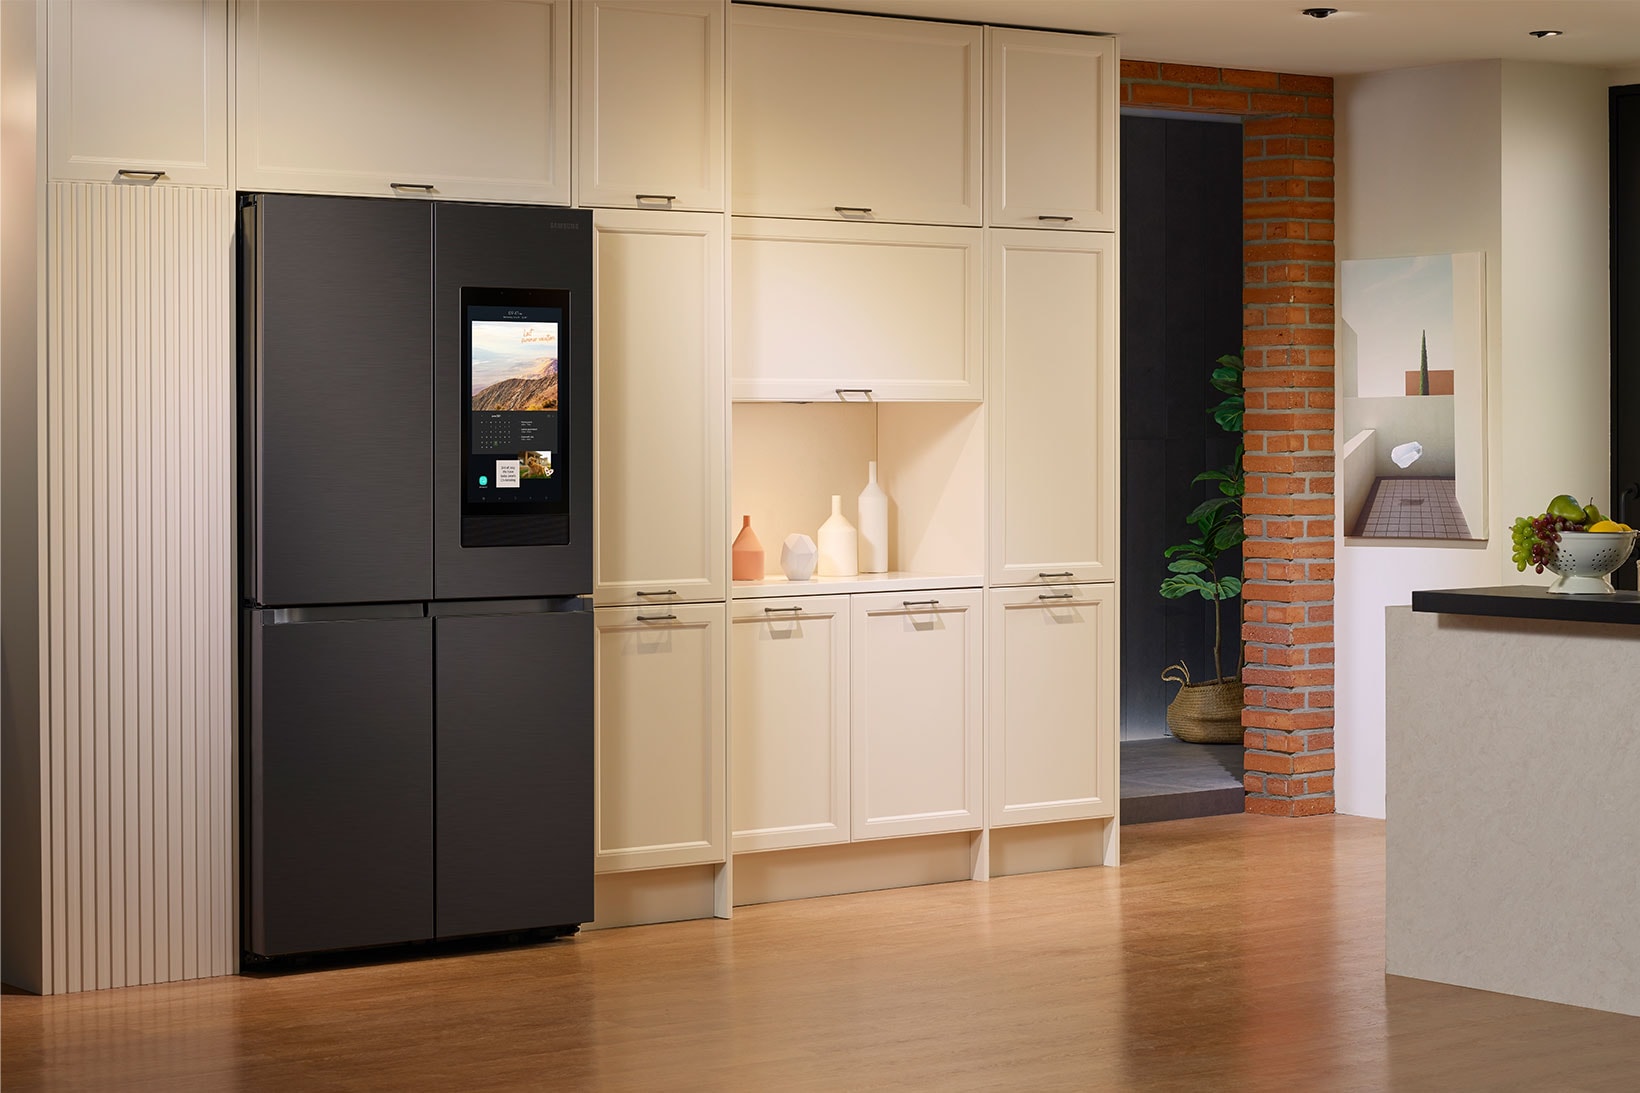 samsung bespoke smart refrigerator family hub black home kitchen gadgets appliances